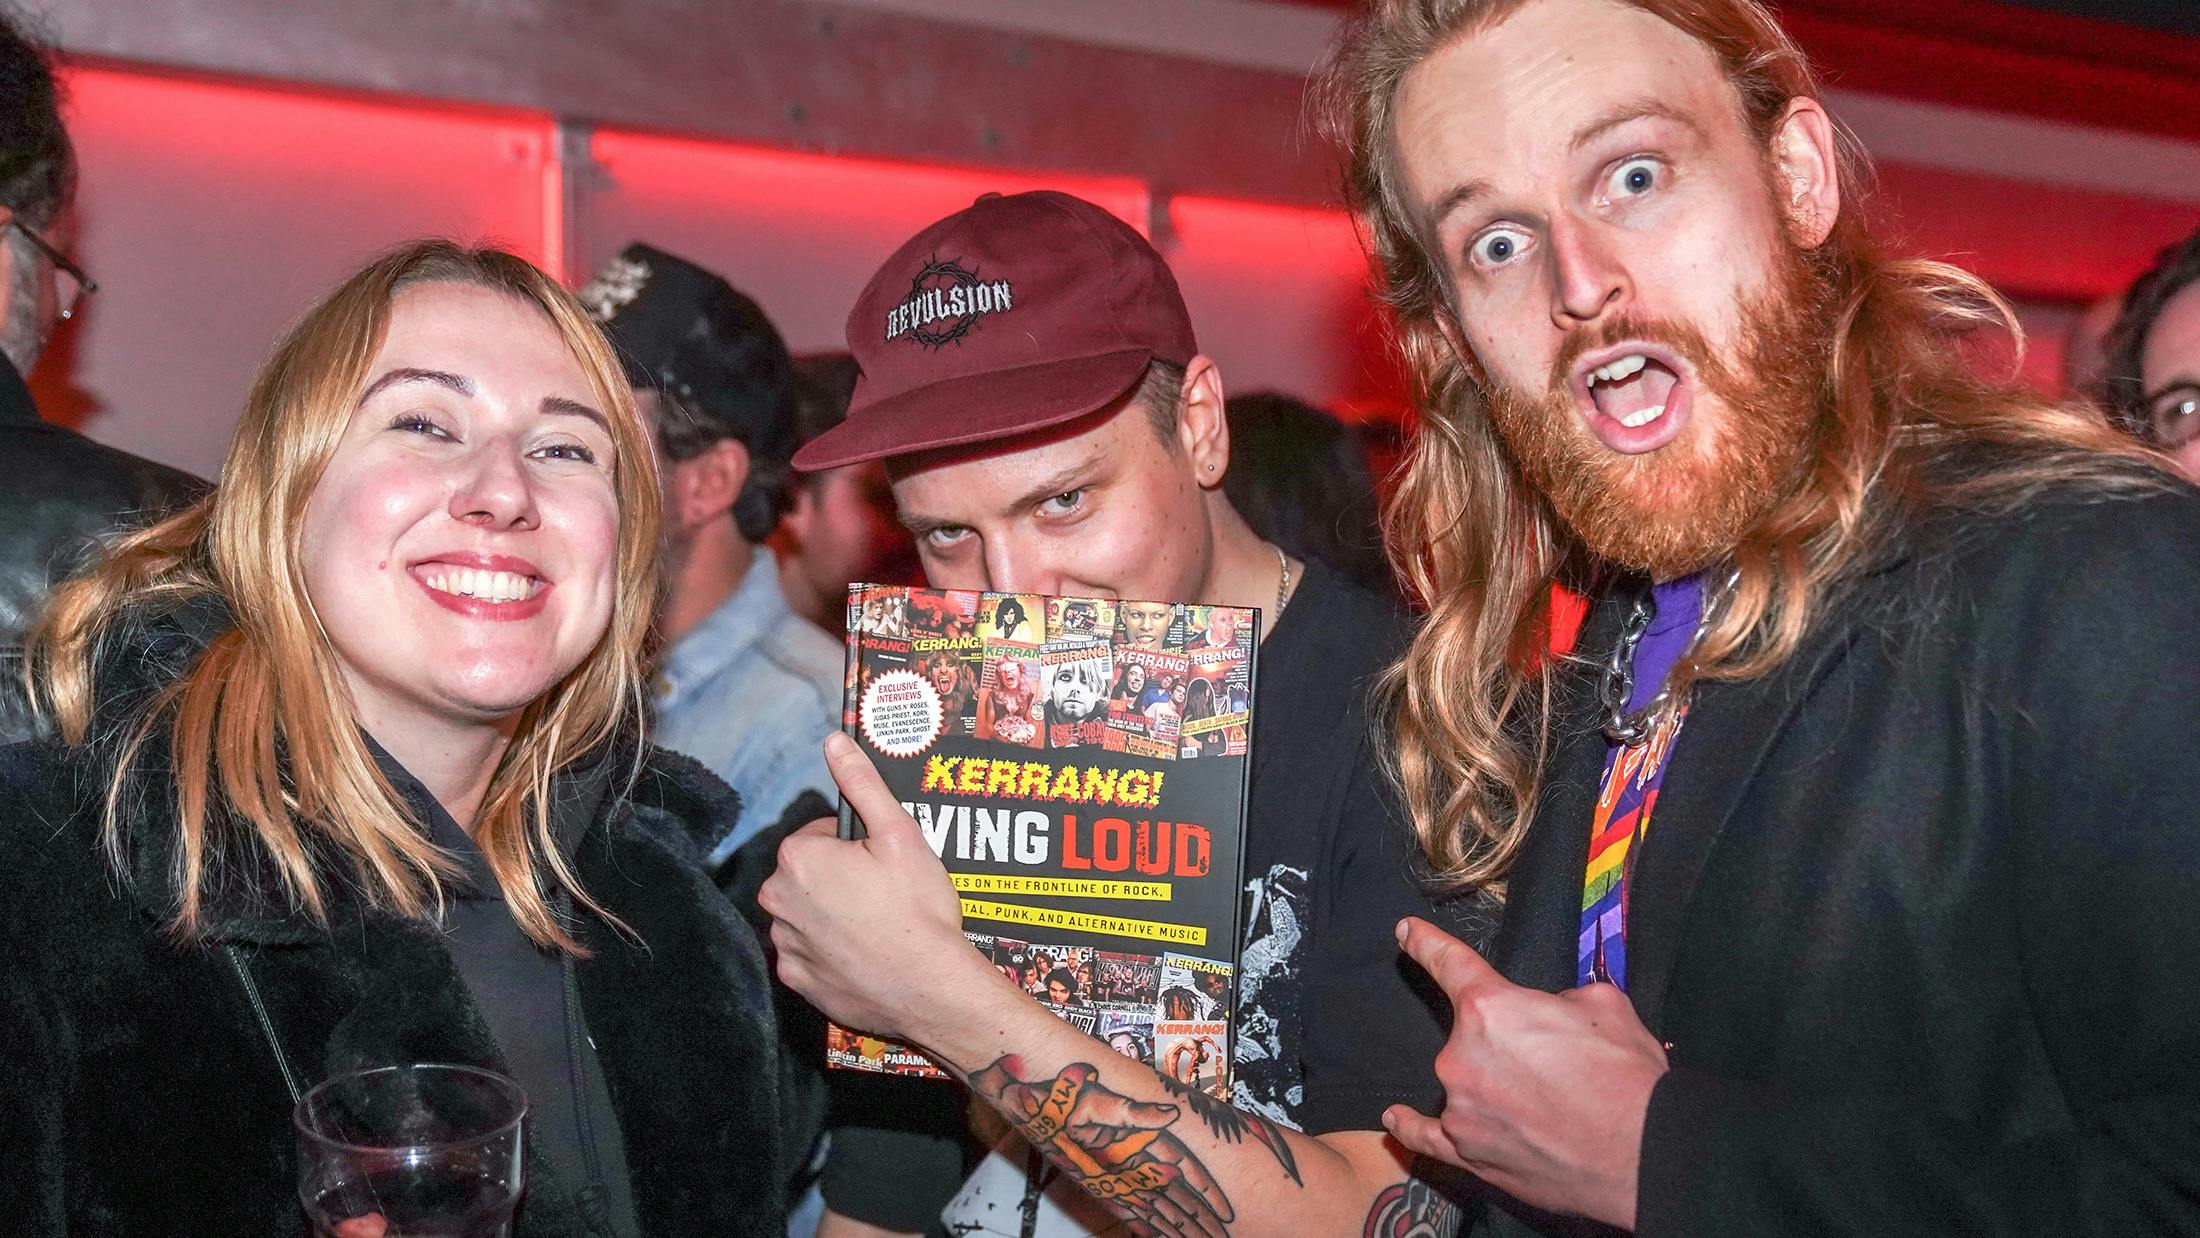 Inside the Kerrang! Living Loud book launch party